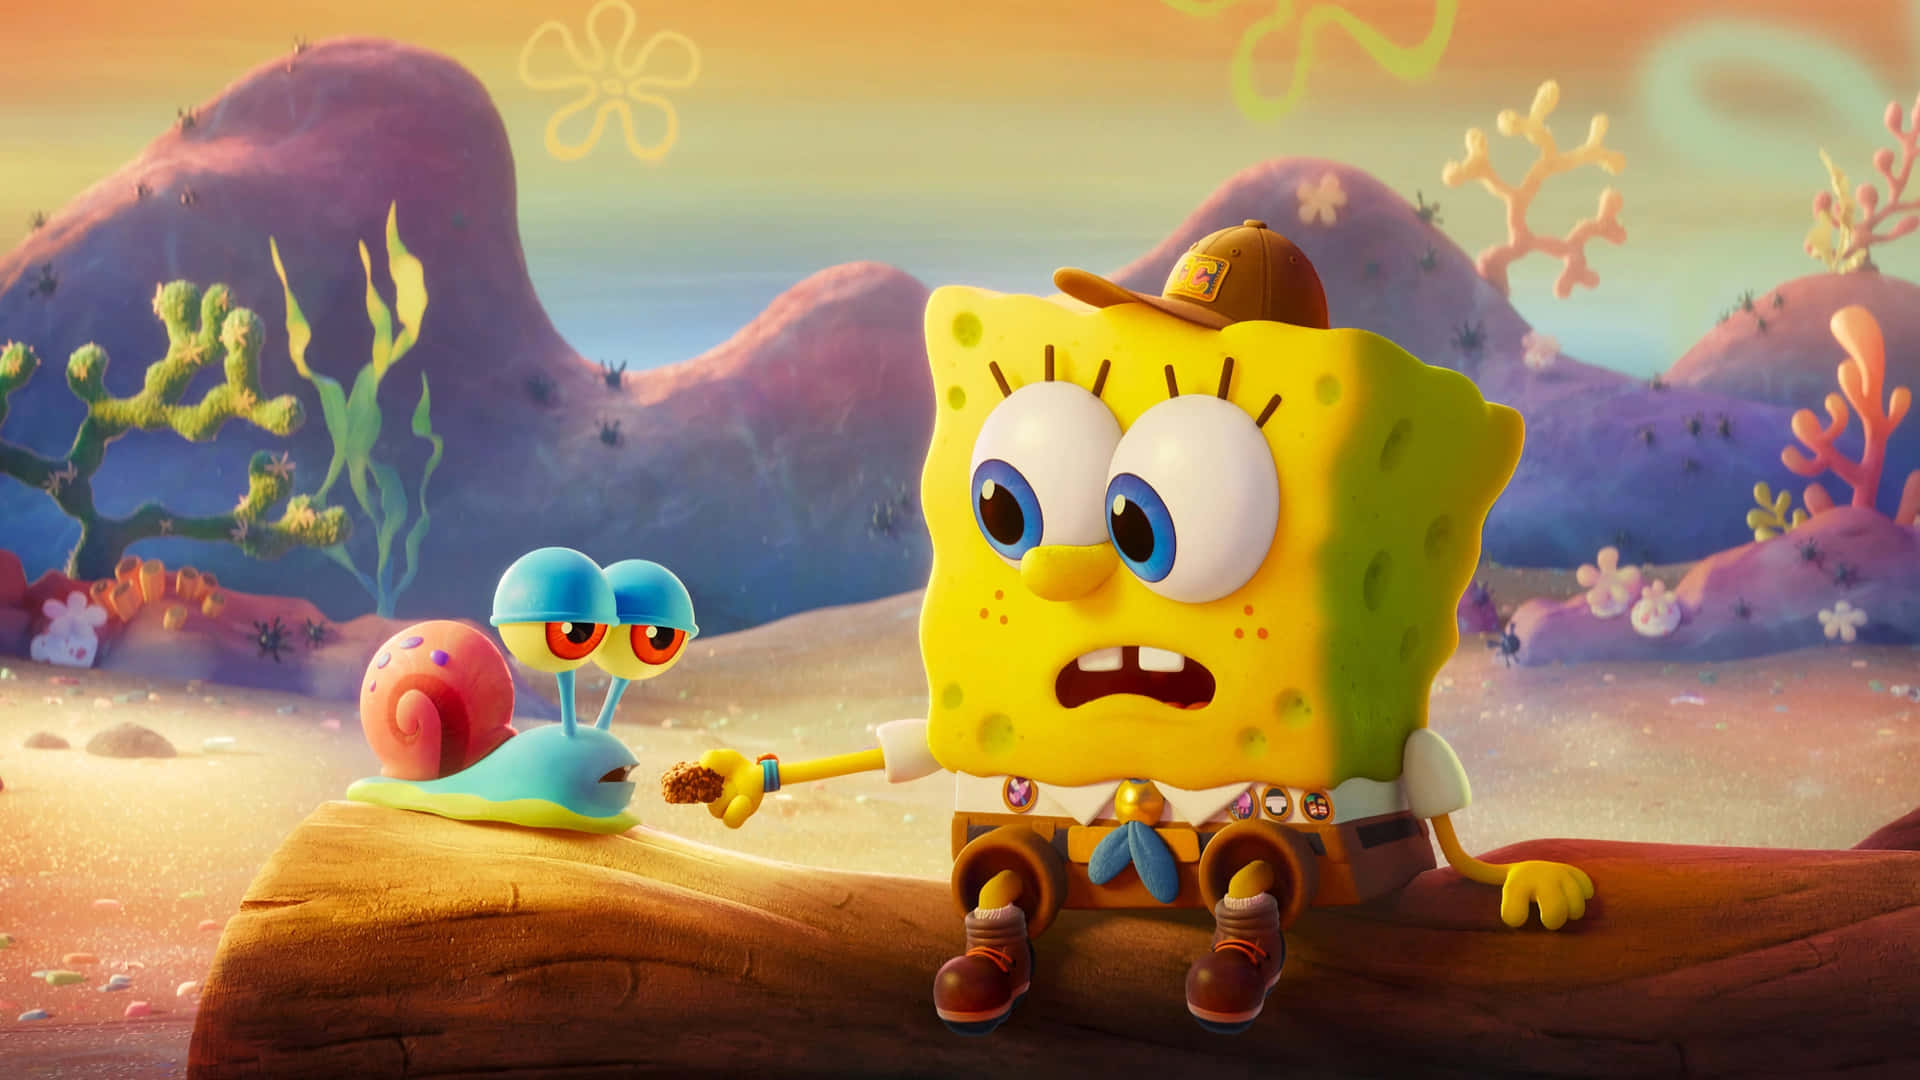 Spongebob Squarepants - The Movie Wallpaper